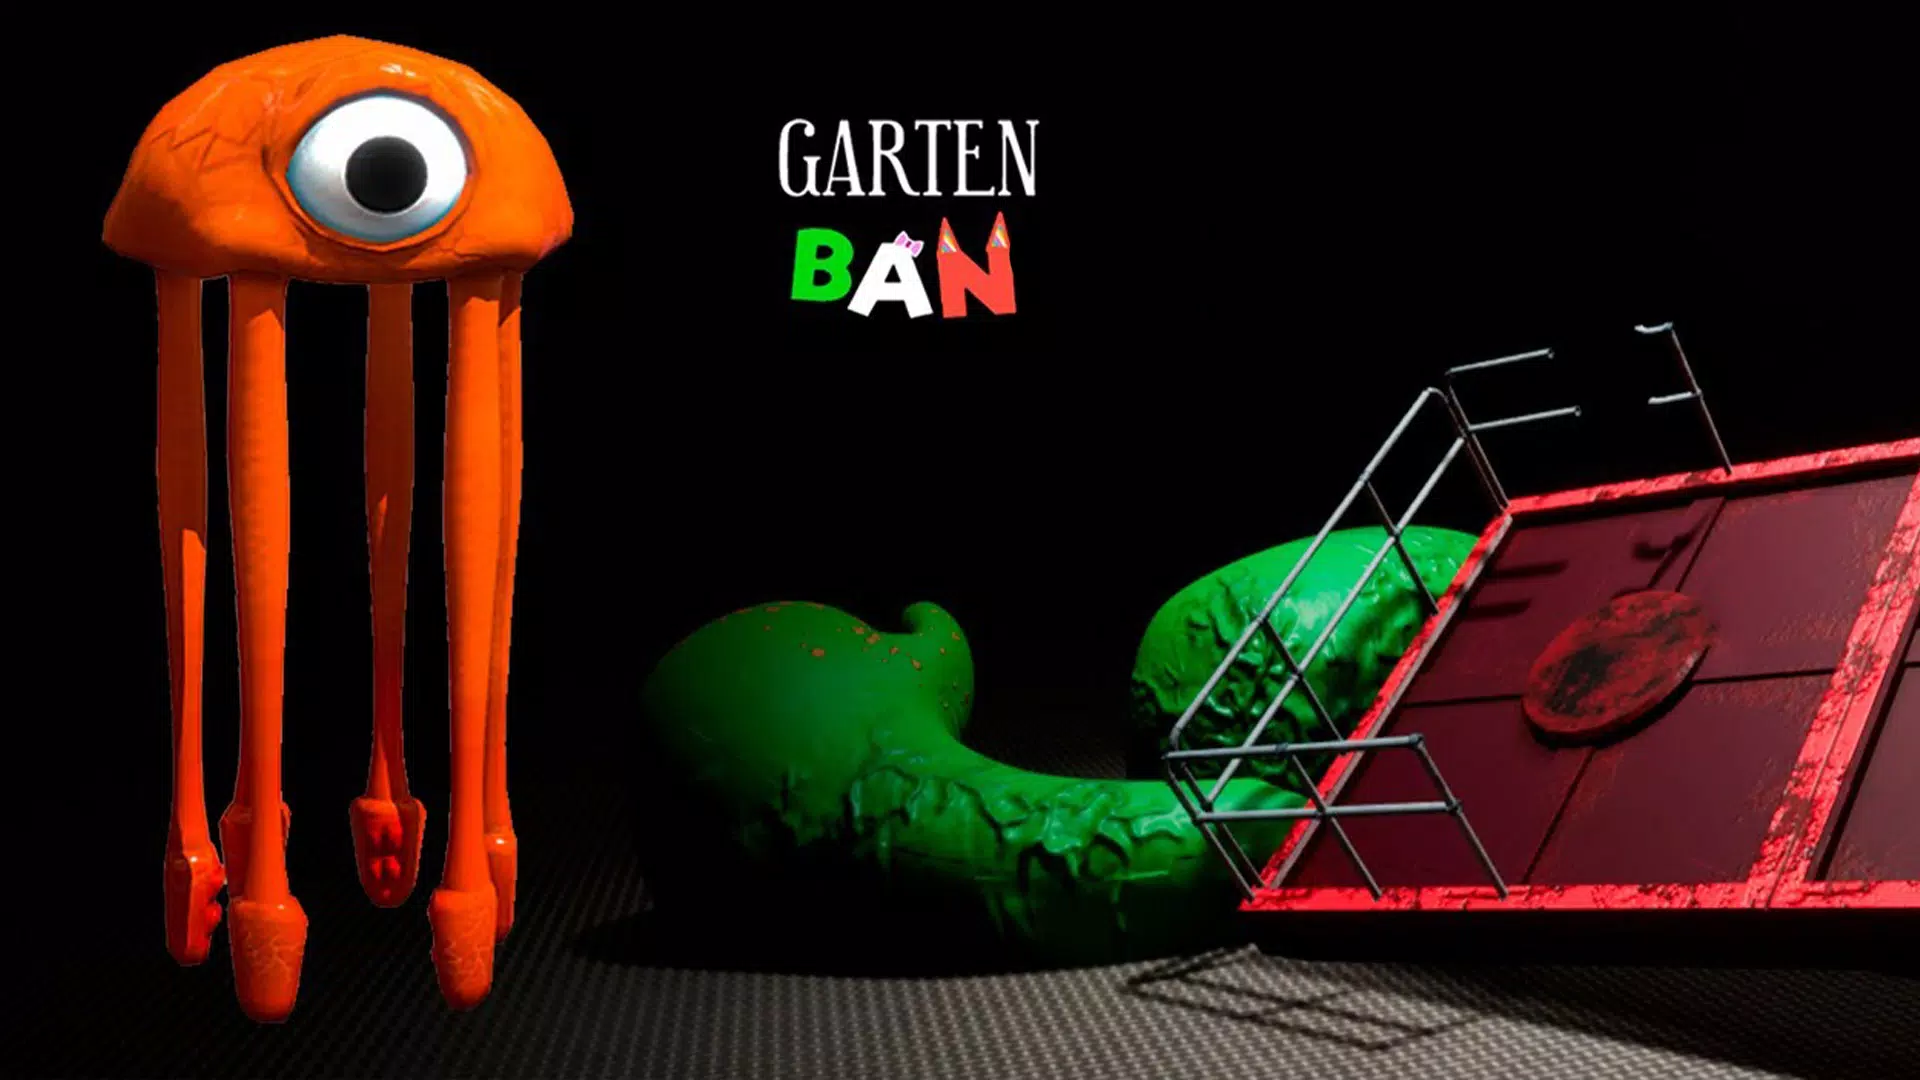 Garten of Banban 3 Mobile Download Android APK & IOS